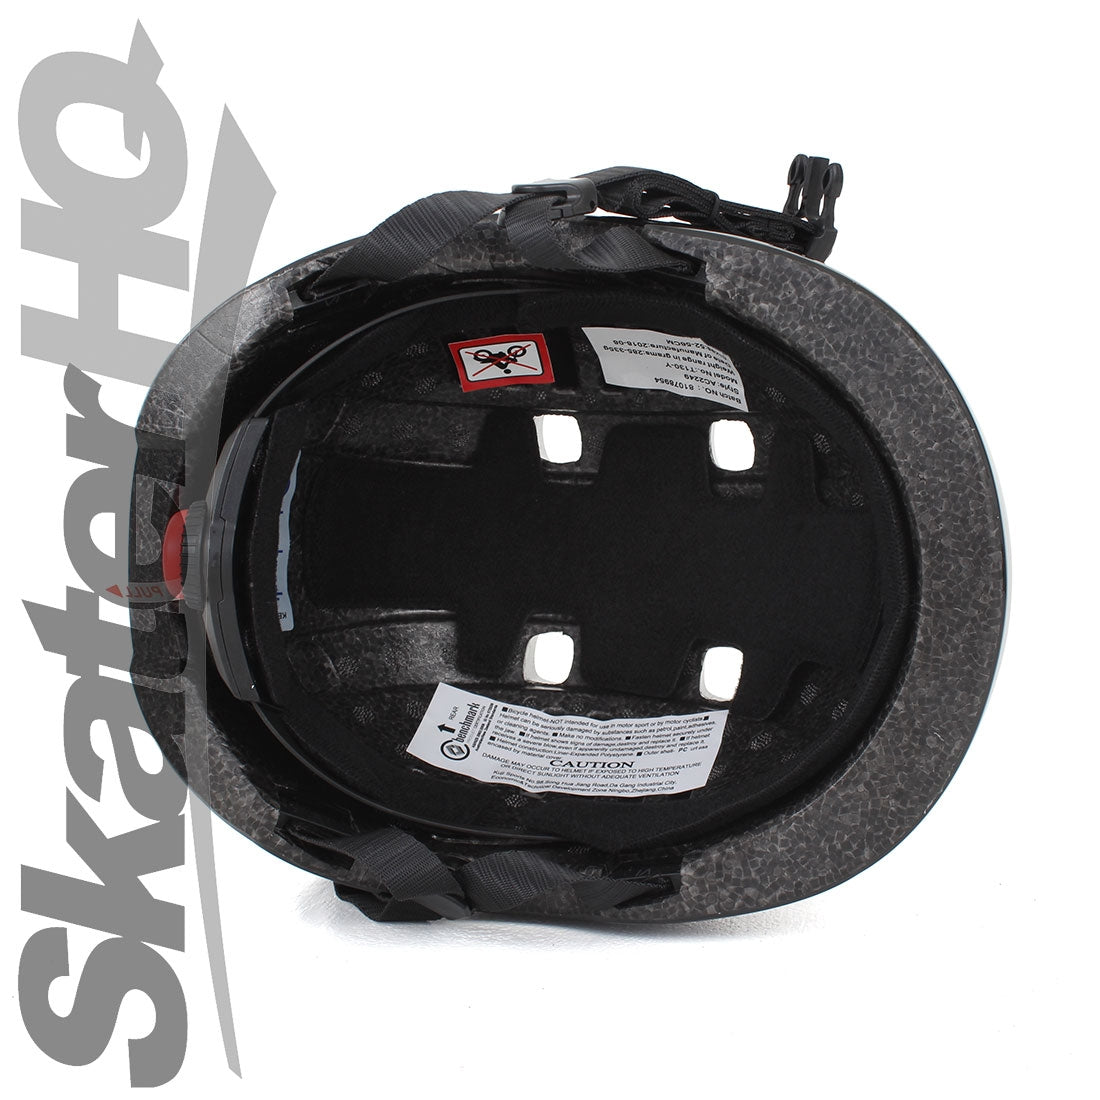 Micro Black Gloss LED Helmet - Small Helmets